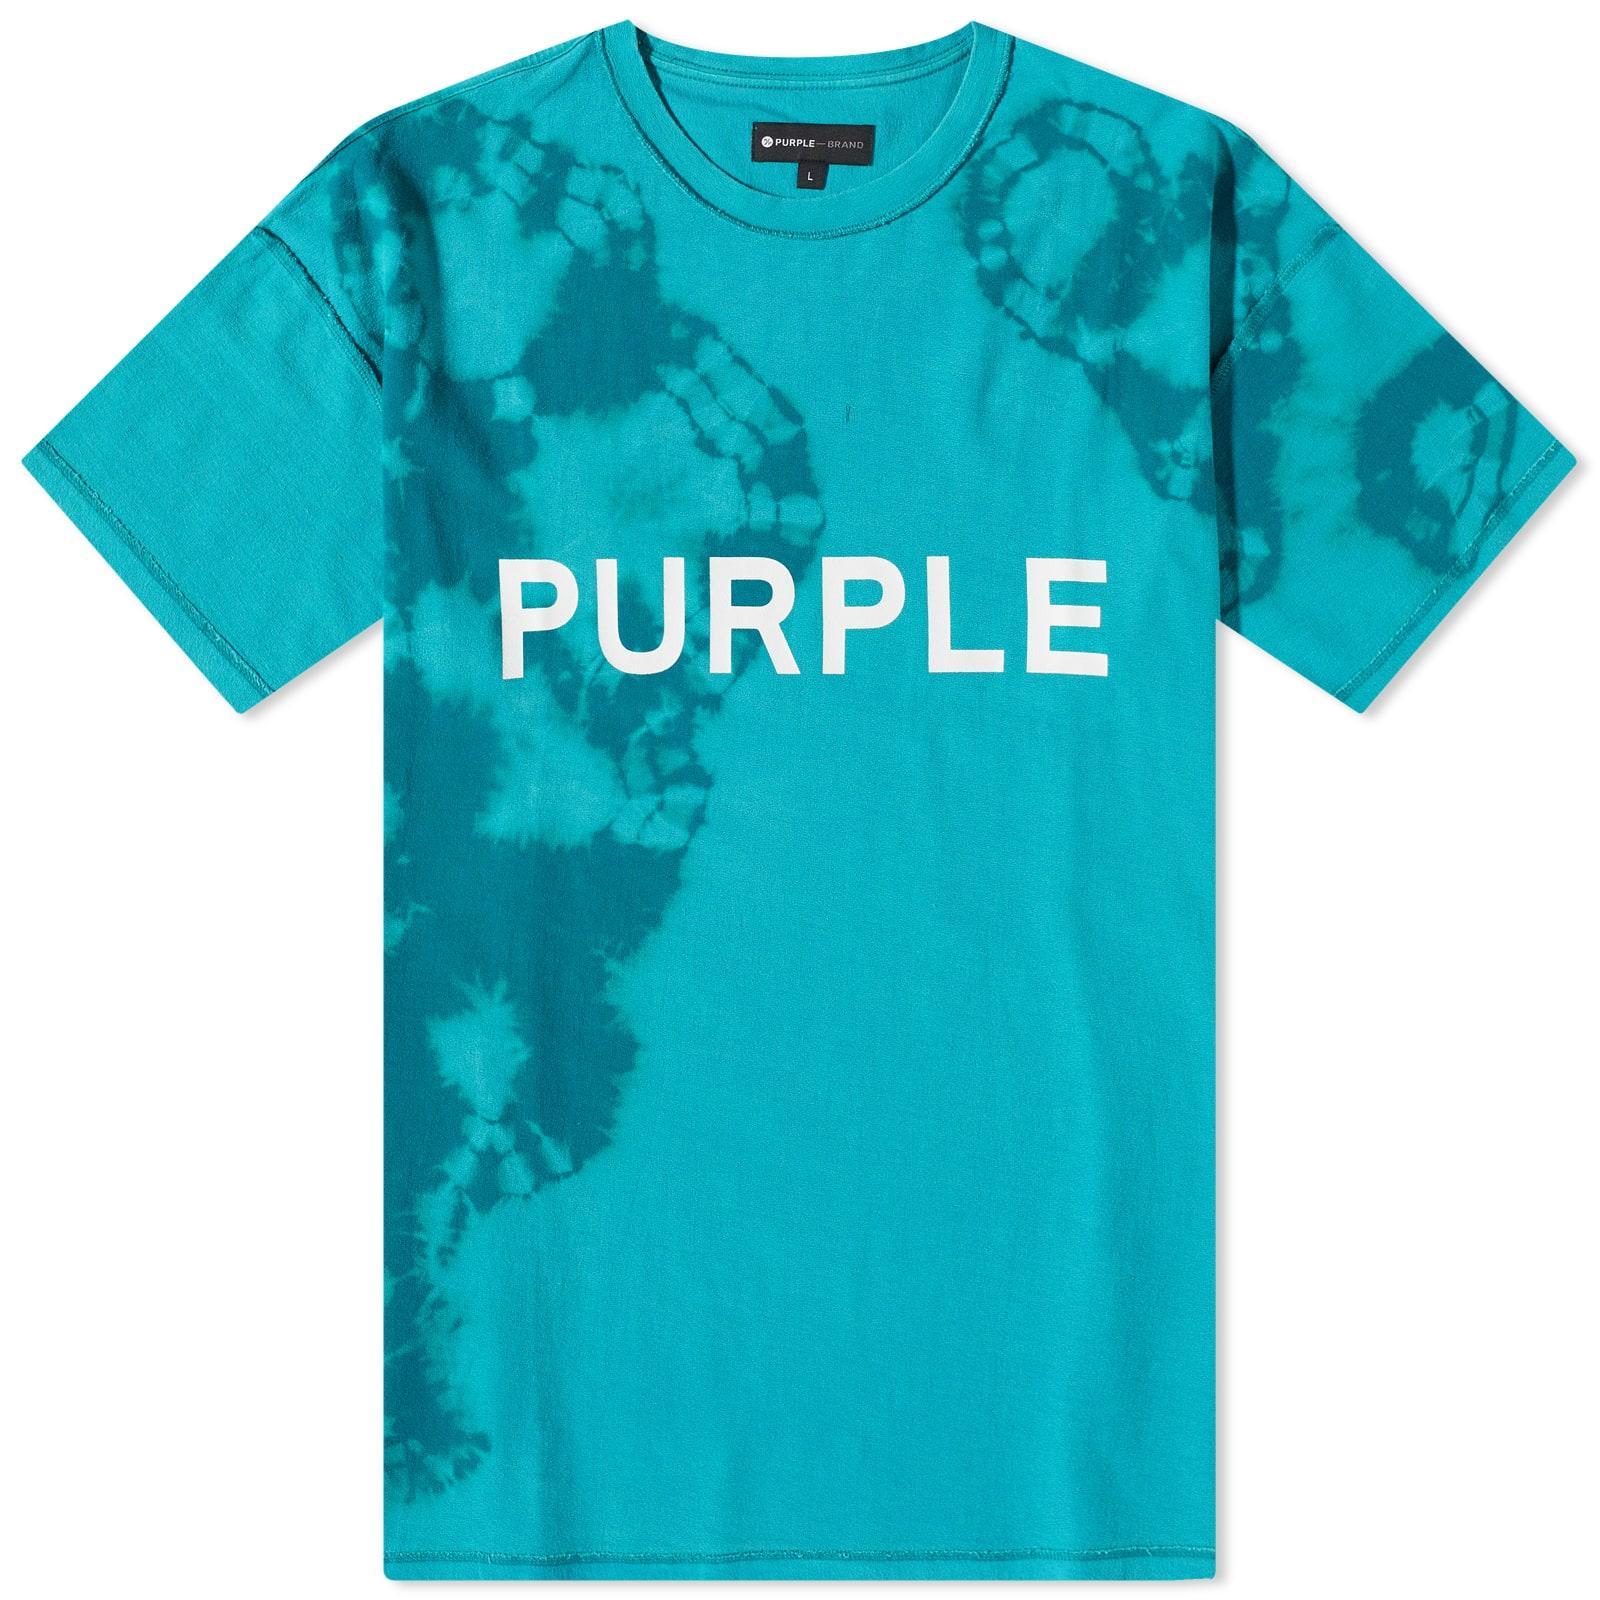 https://cdna.lystit.com/photos/endclothing/57cc1eb4/purple-brand-Green-Tie-dye-Logo-T-shirt.jpeg